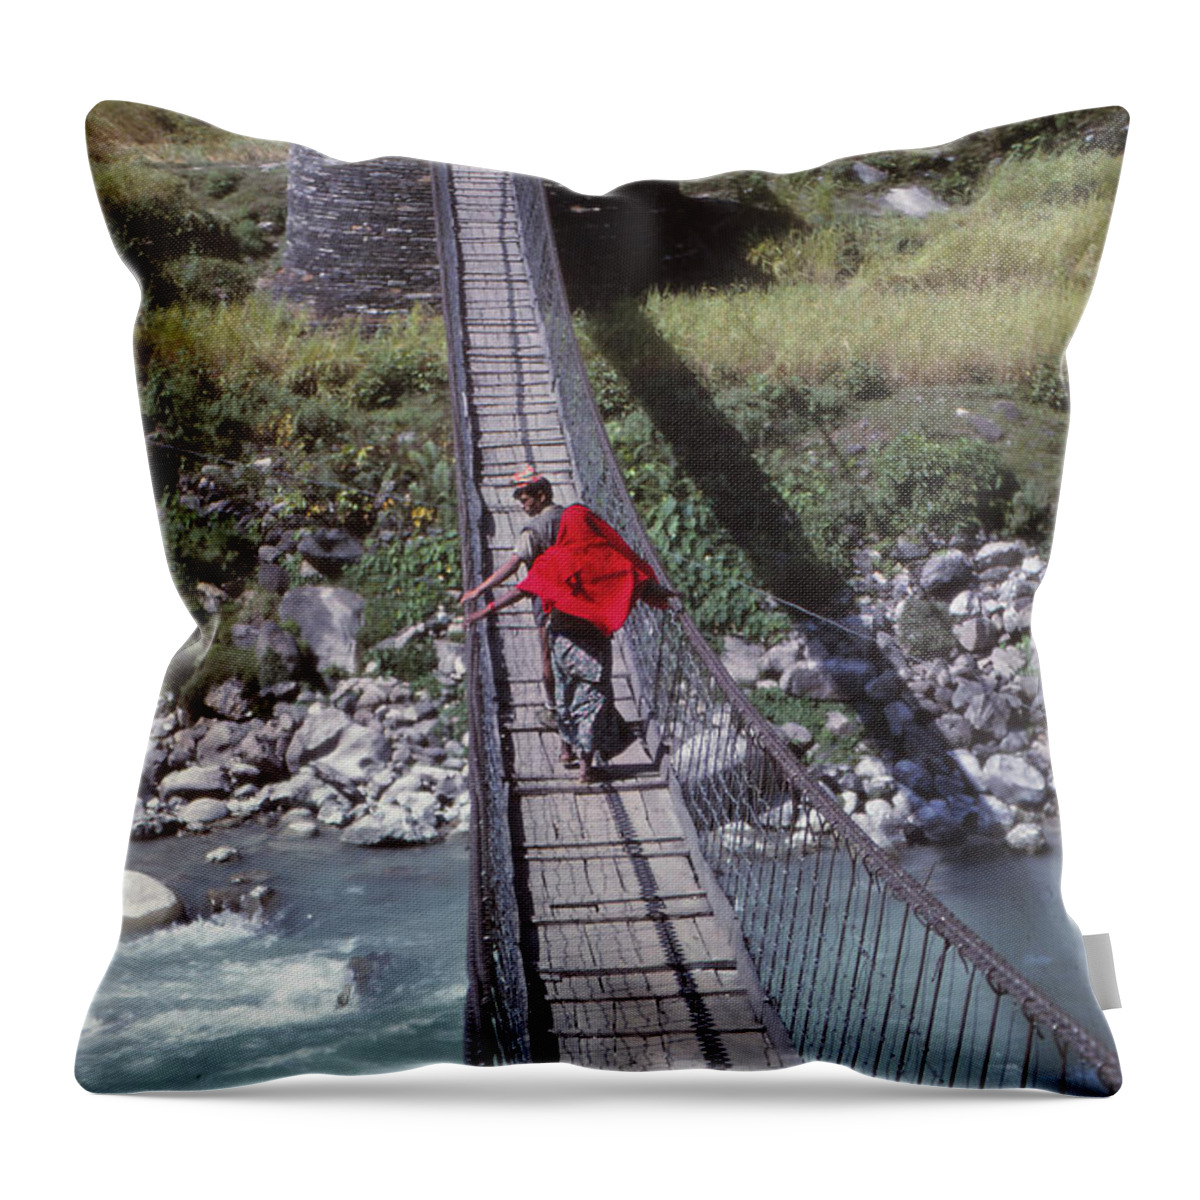 Nepal Throw Pillow featuring the photograph Crossing a suspension bridge by Steve Estvanik